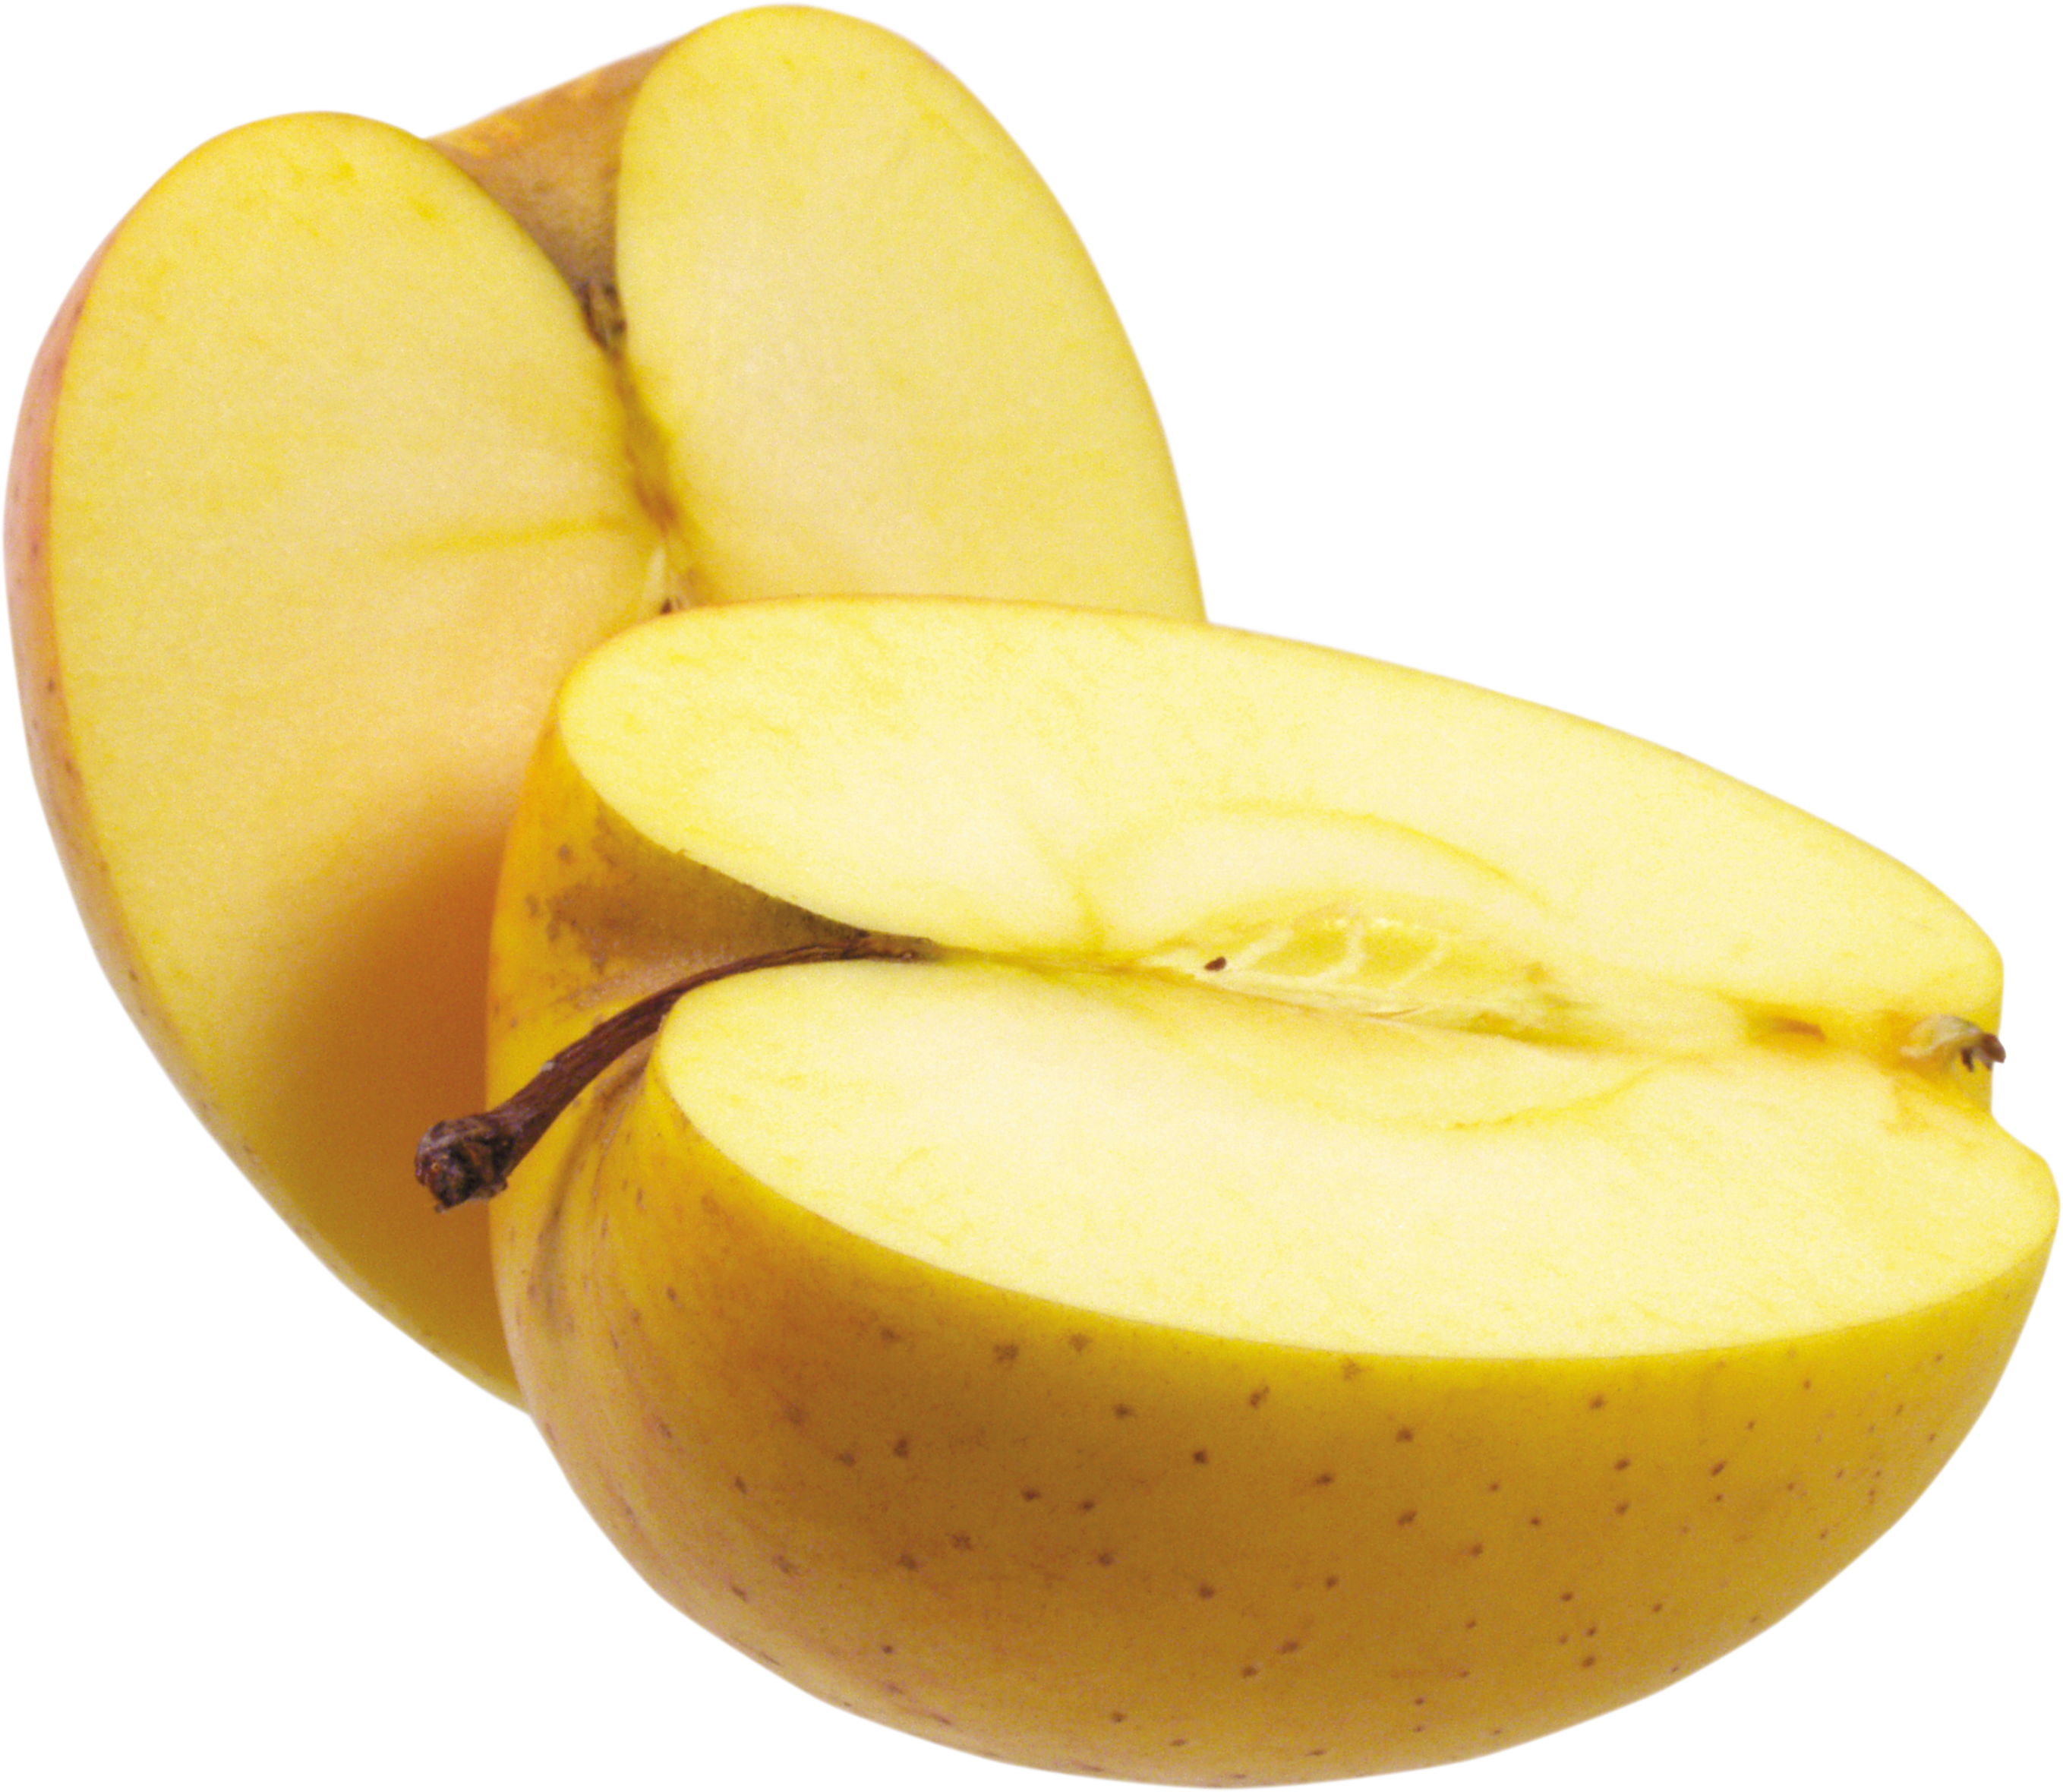 apple pears fruit fruit slice